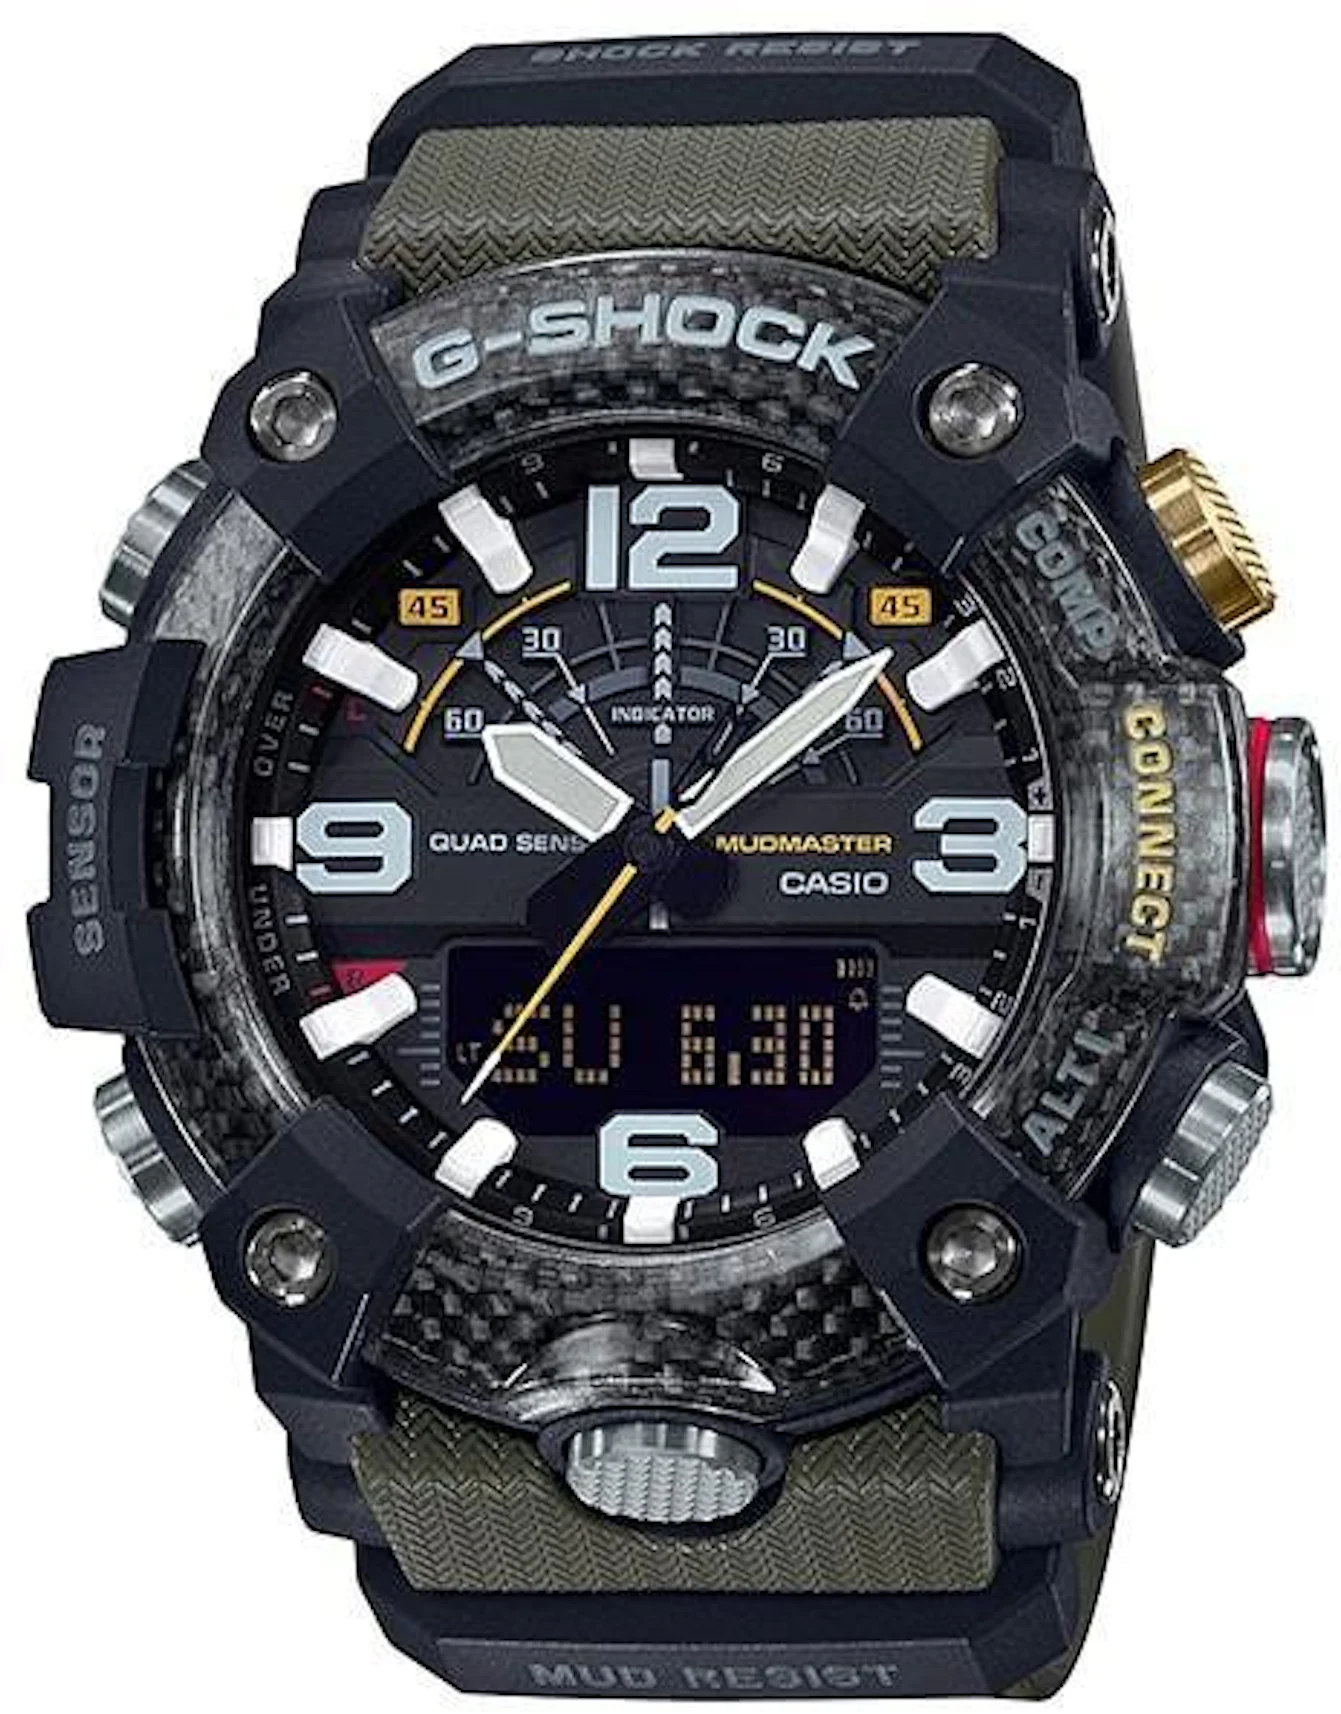 https://images.stockx.com/images/Casio-G-Shock-Mudmaster-GGB100-1A3-Black.jpg?fit=fill&bg=FFFFFF&w=1200&h=857&fm=webp&auto=compress&dpr=2&trim=color&updated_at=1606315822&q=60